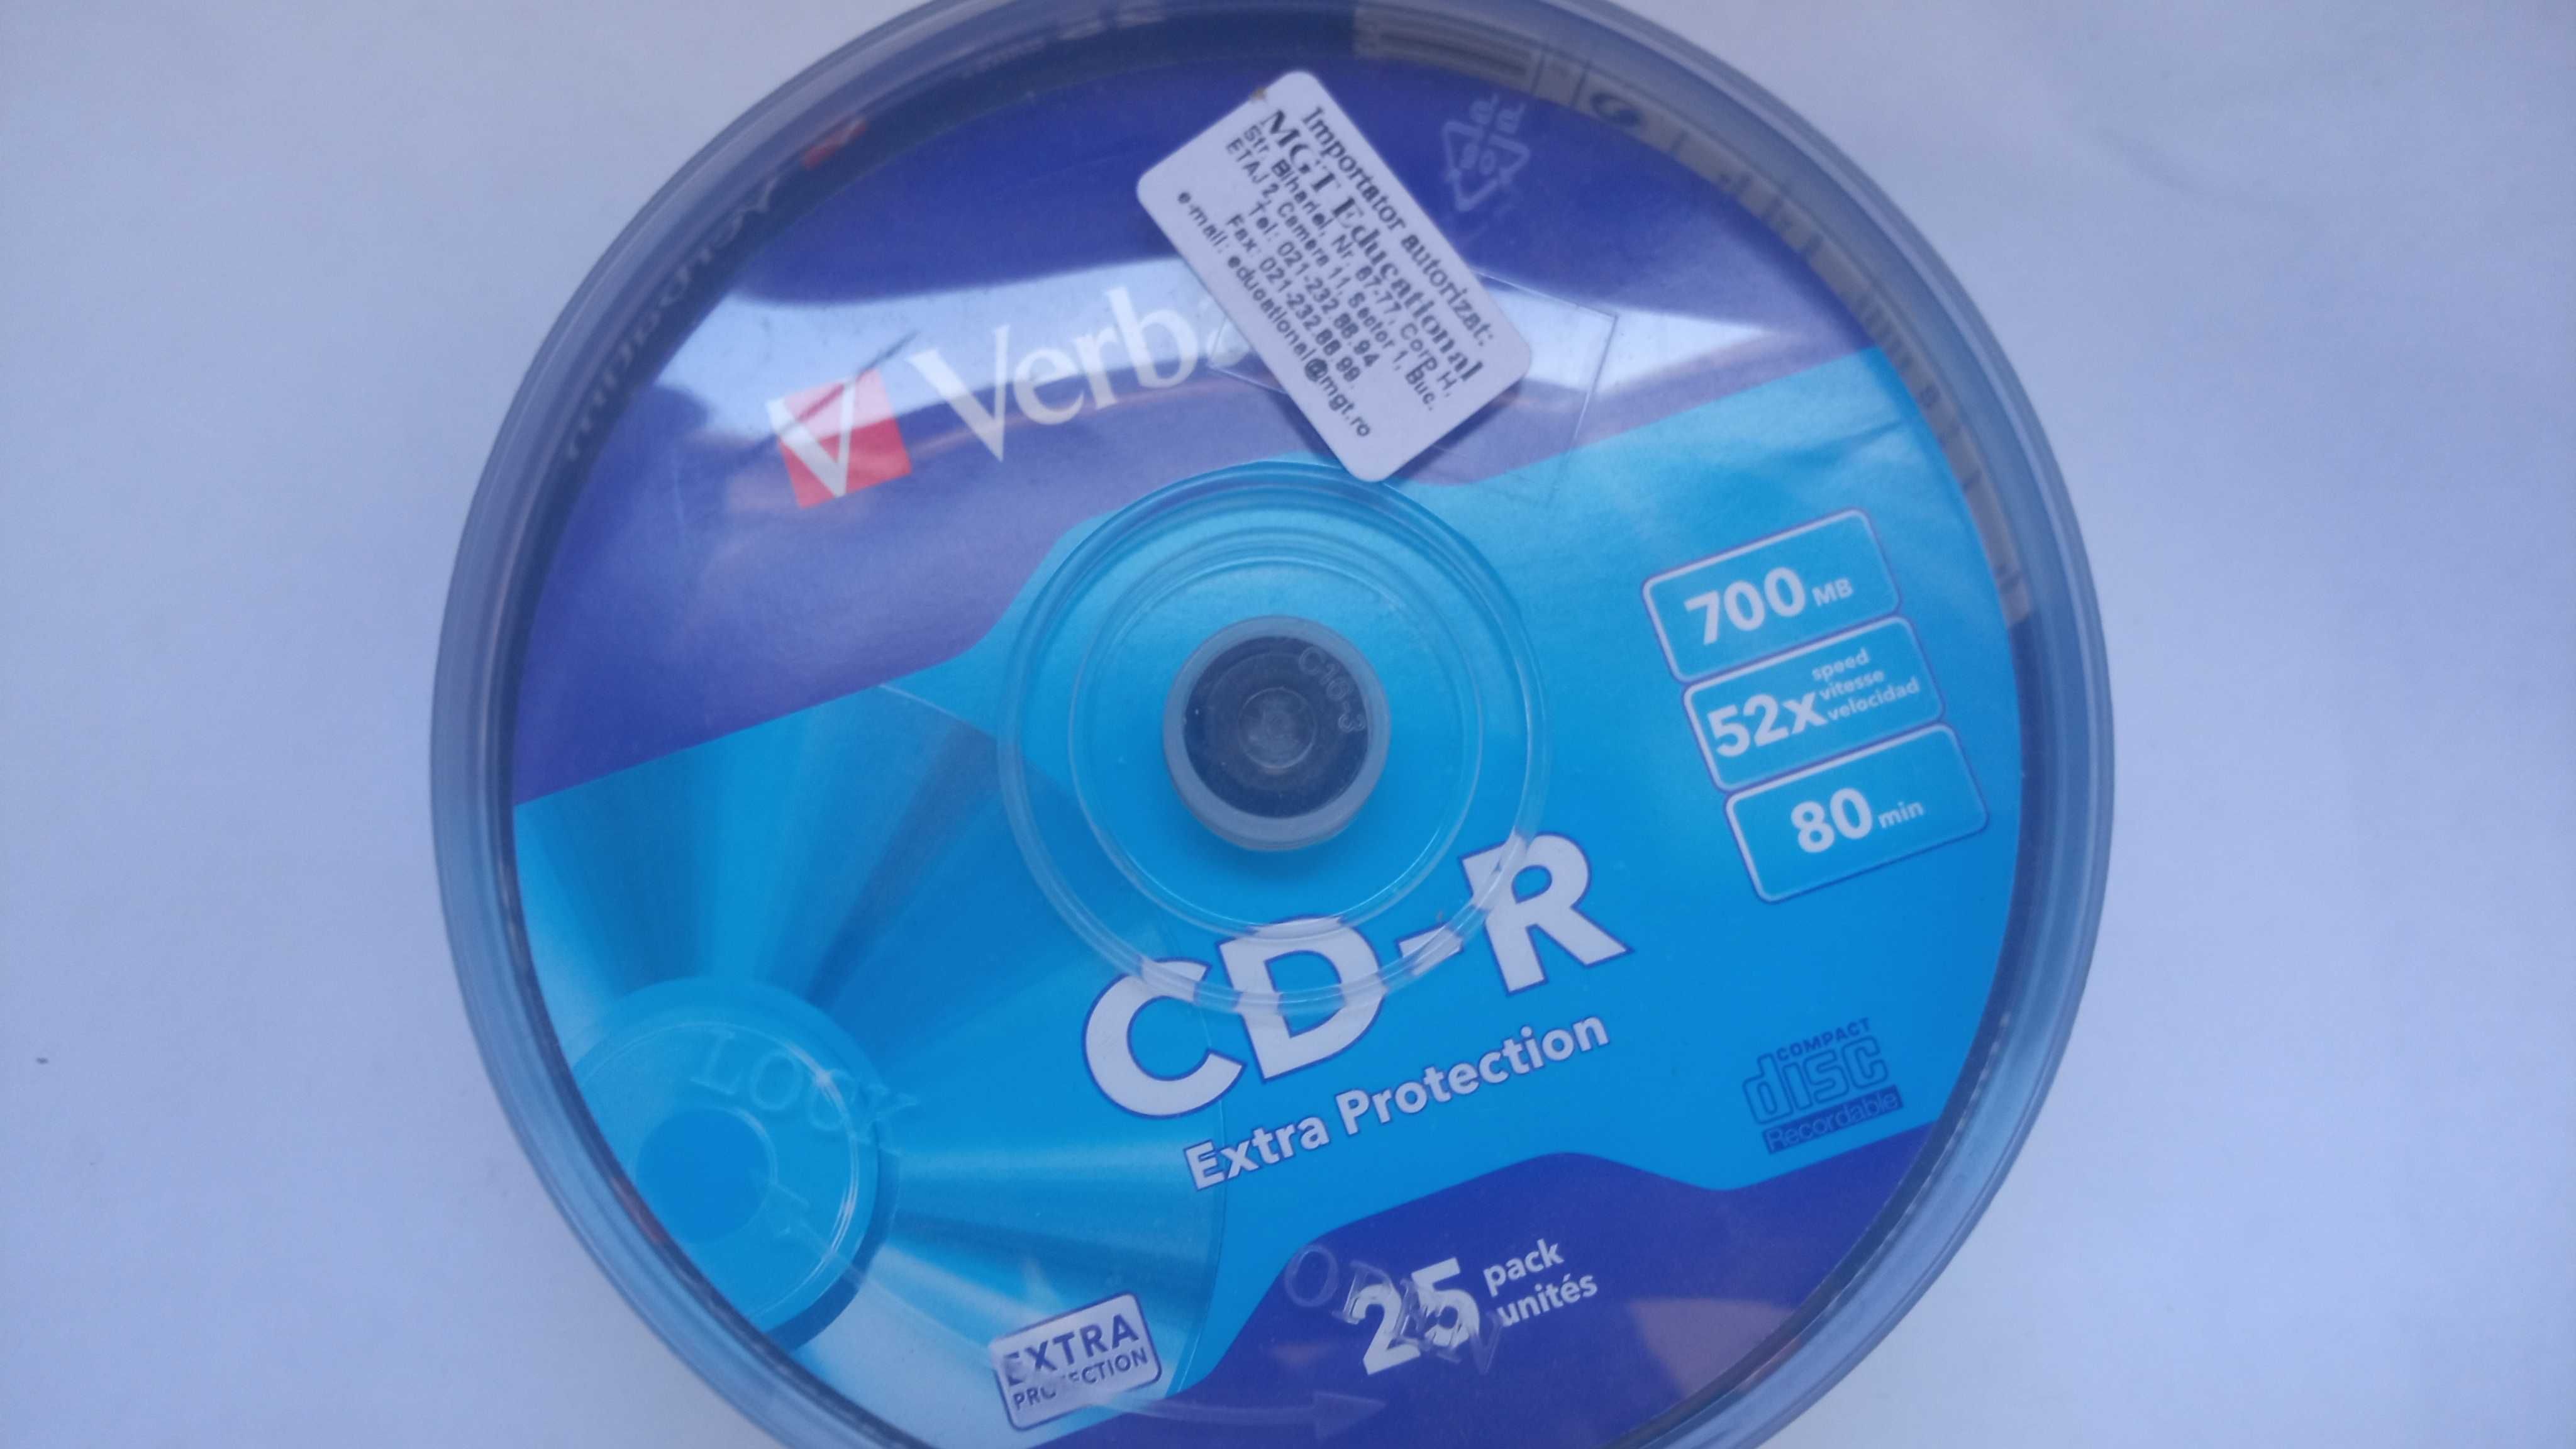 Vand Adidasi , marimea 39, 25 cm,noi !Si DVD+R si CD-R Verbatim  25buc